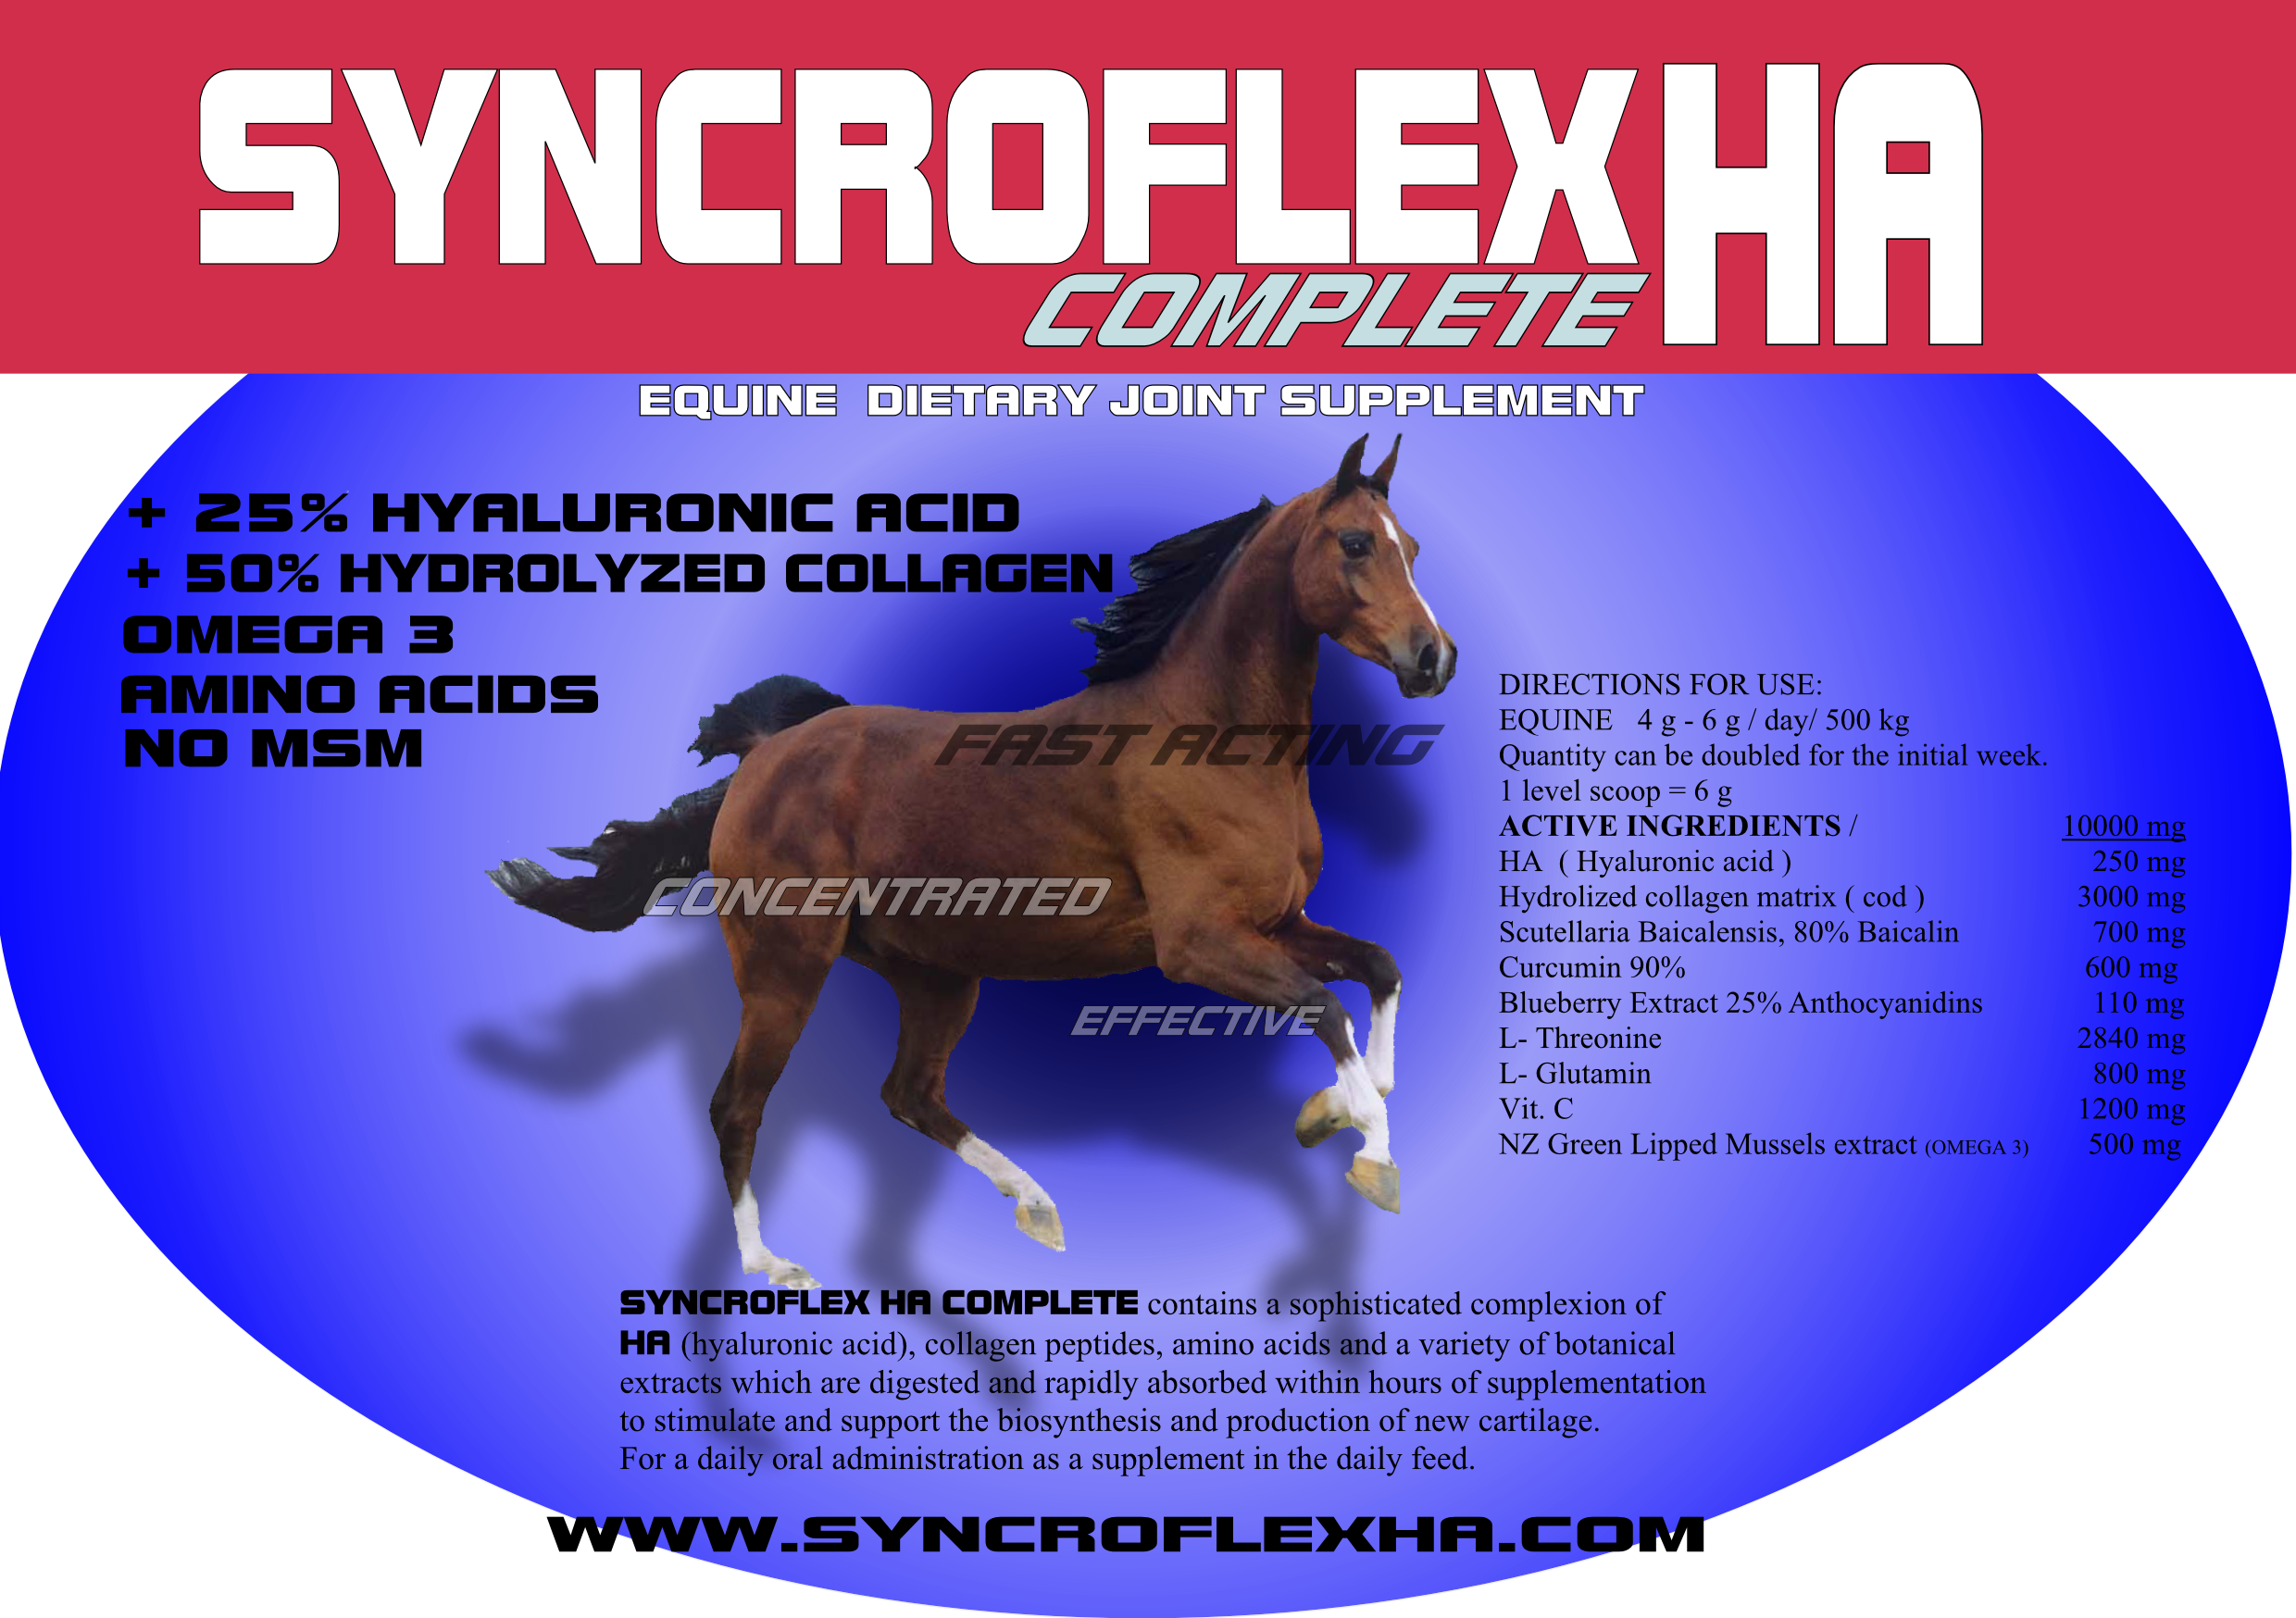 Syncroflex HA Complete